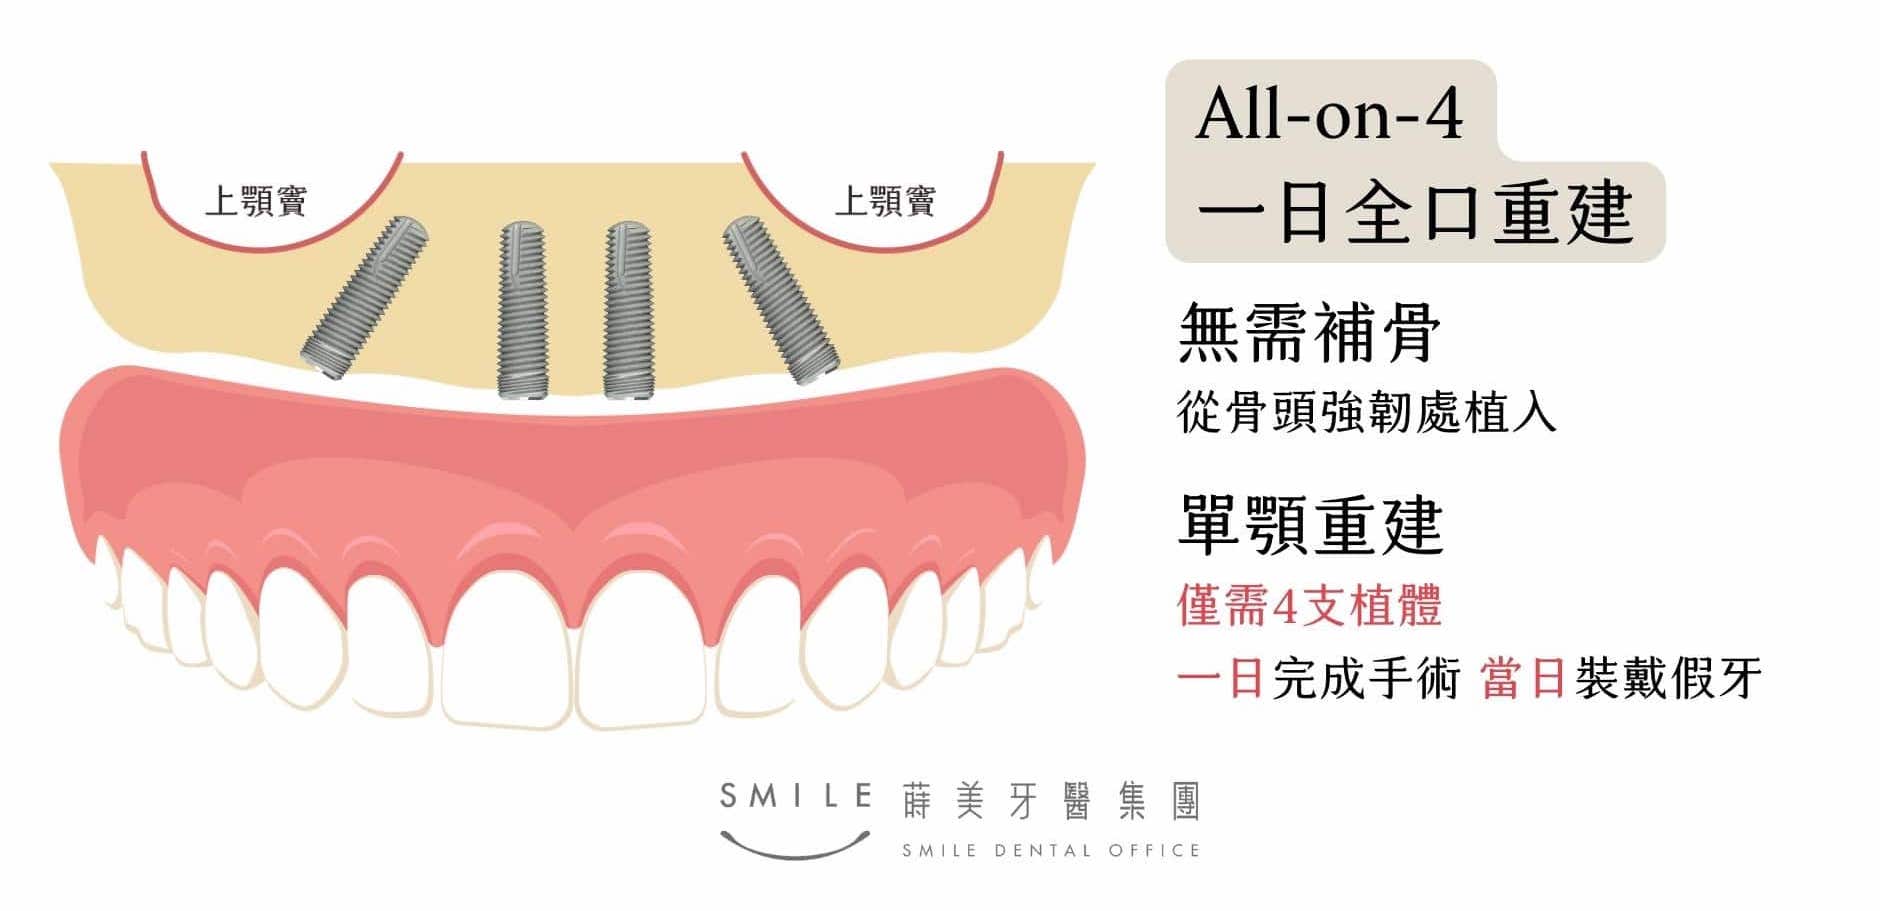 All-on-4速定式植牙無需補骨